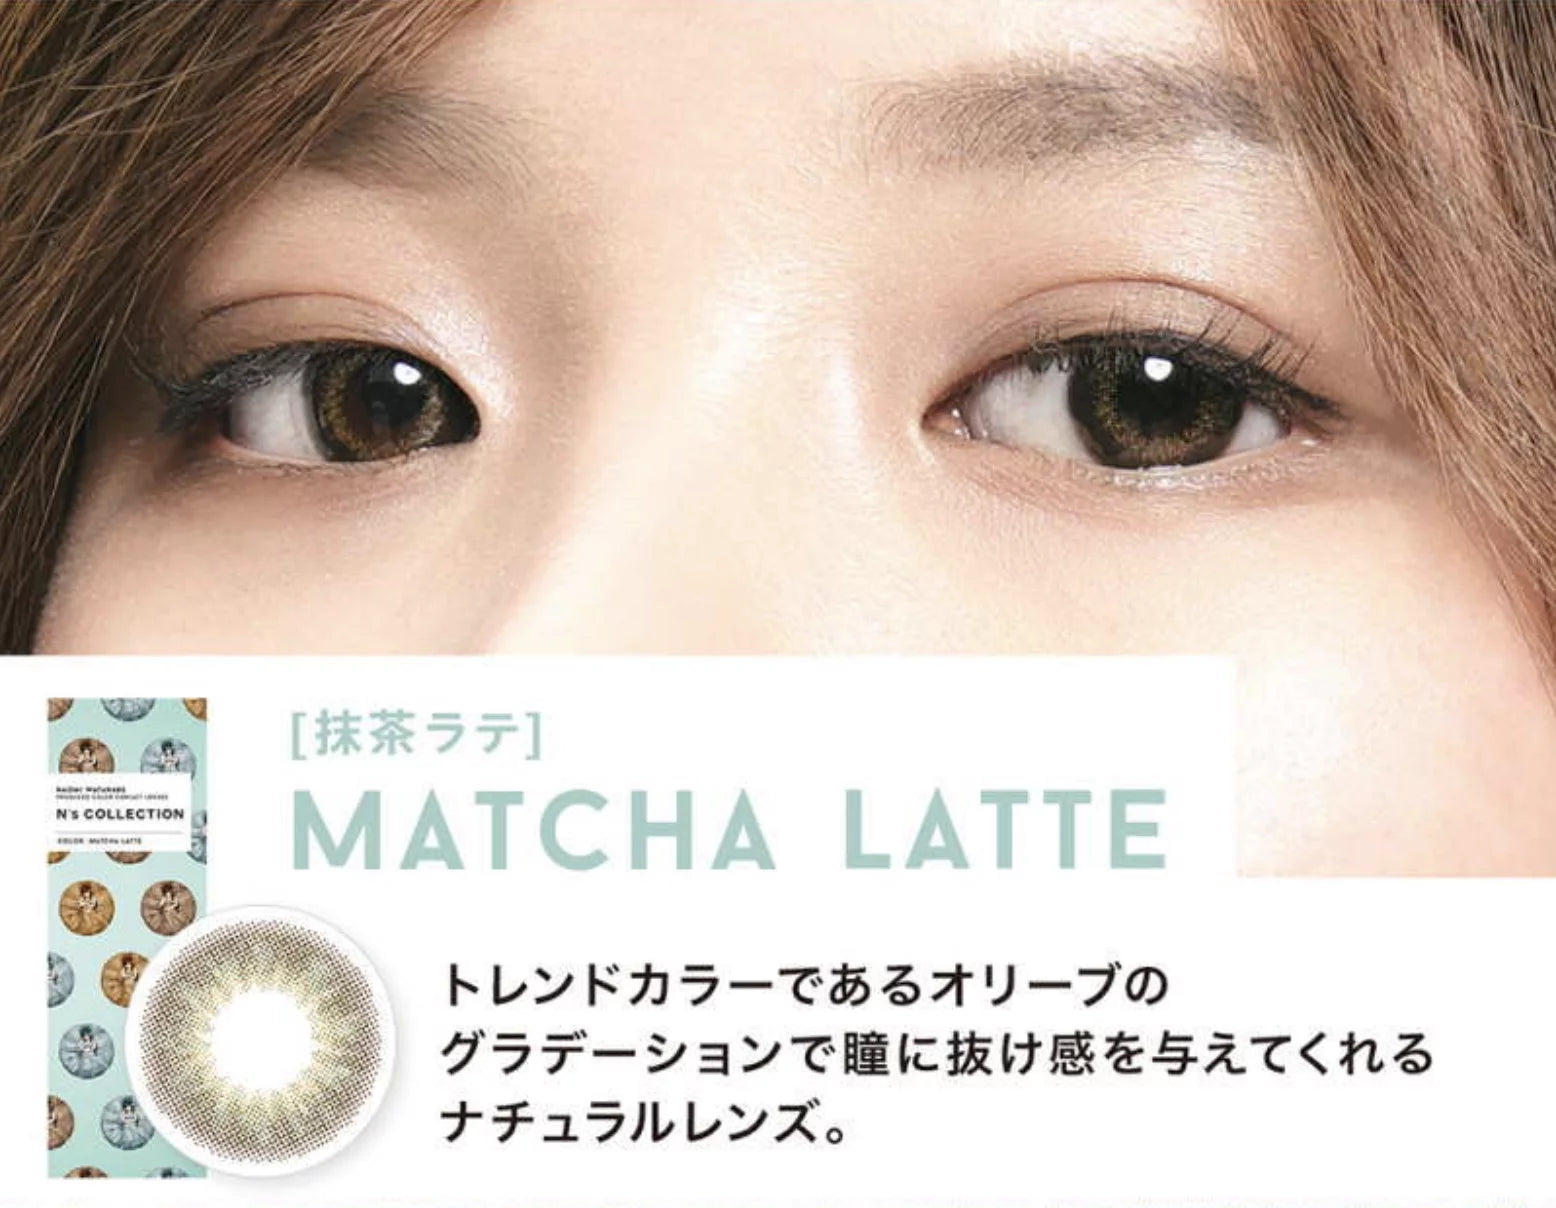 N's Collection 1-DAY MATCHA LATTE 每日拋棄型有色彩妝隱形眼鏡 (10片裝)